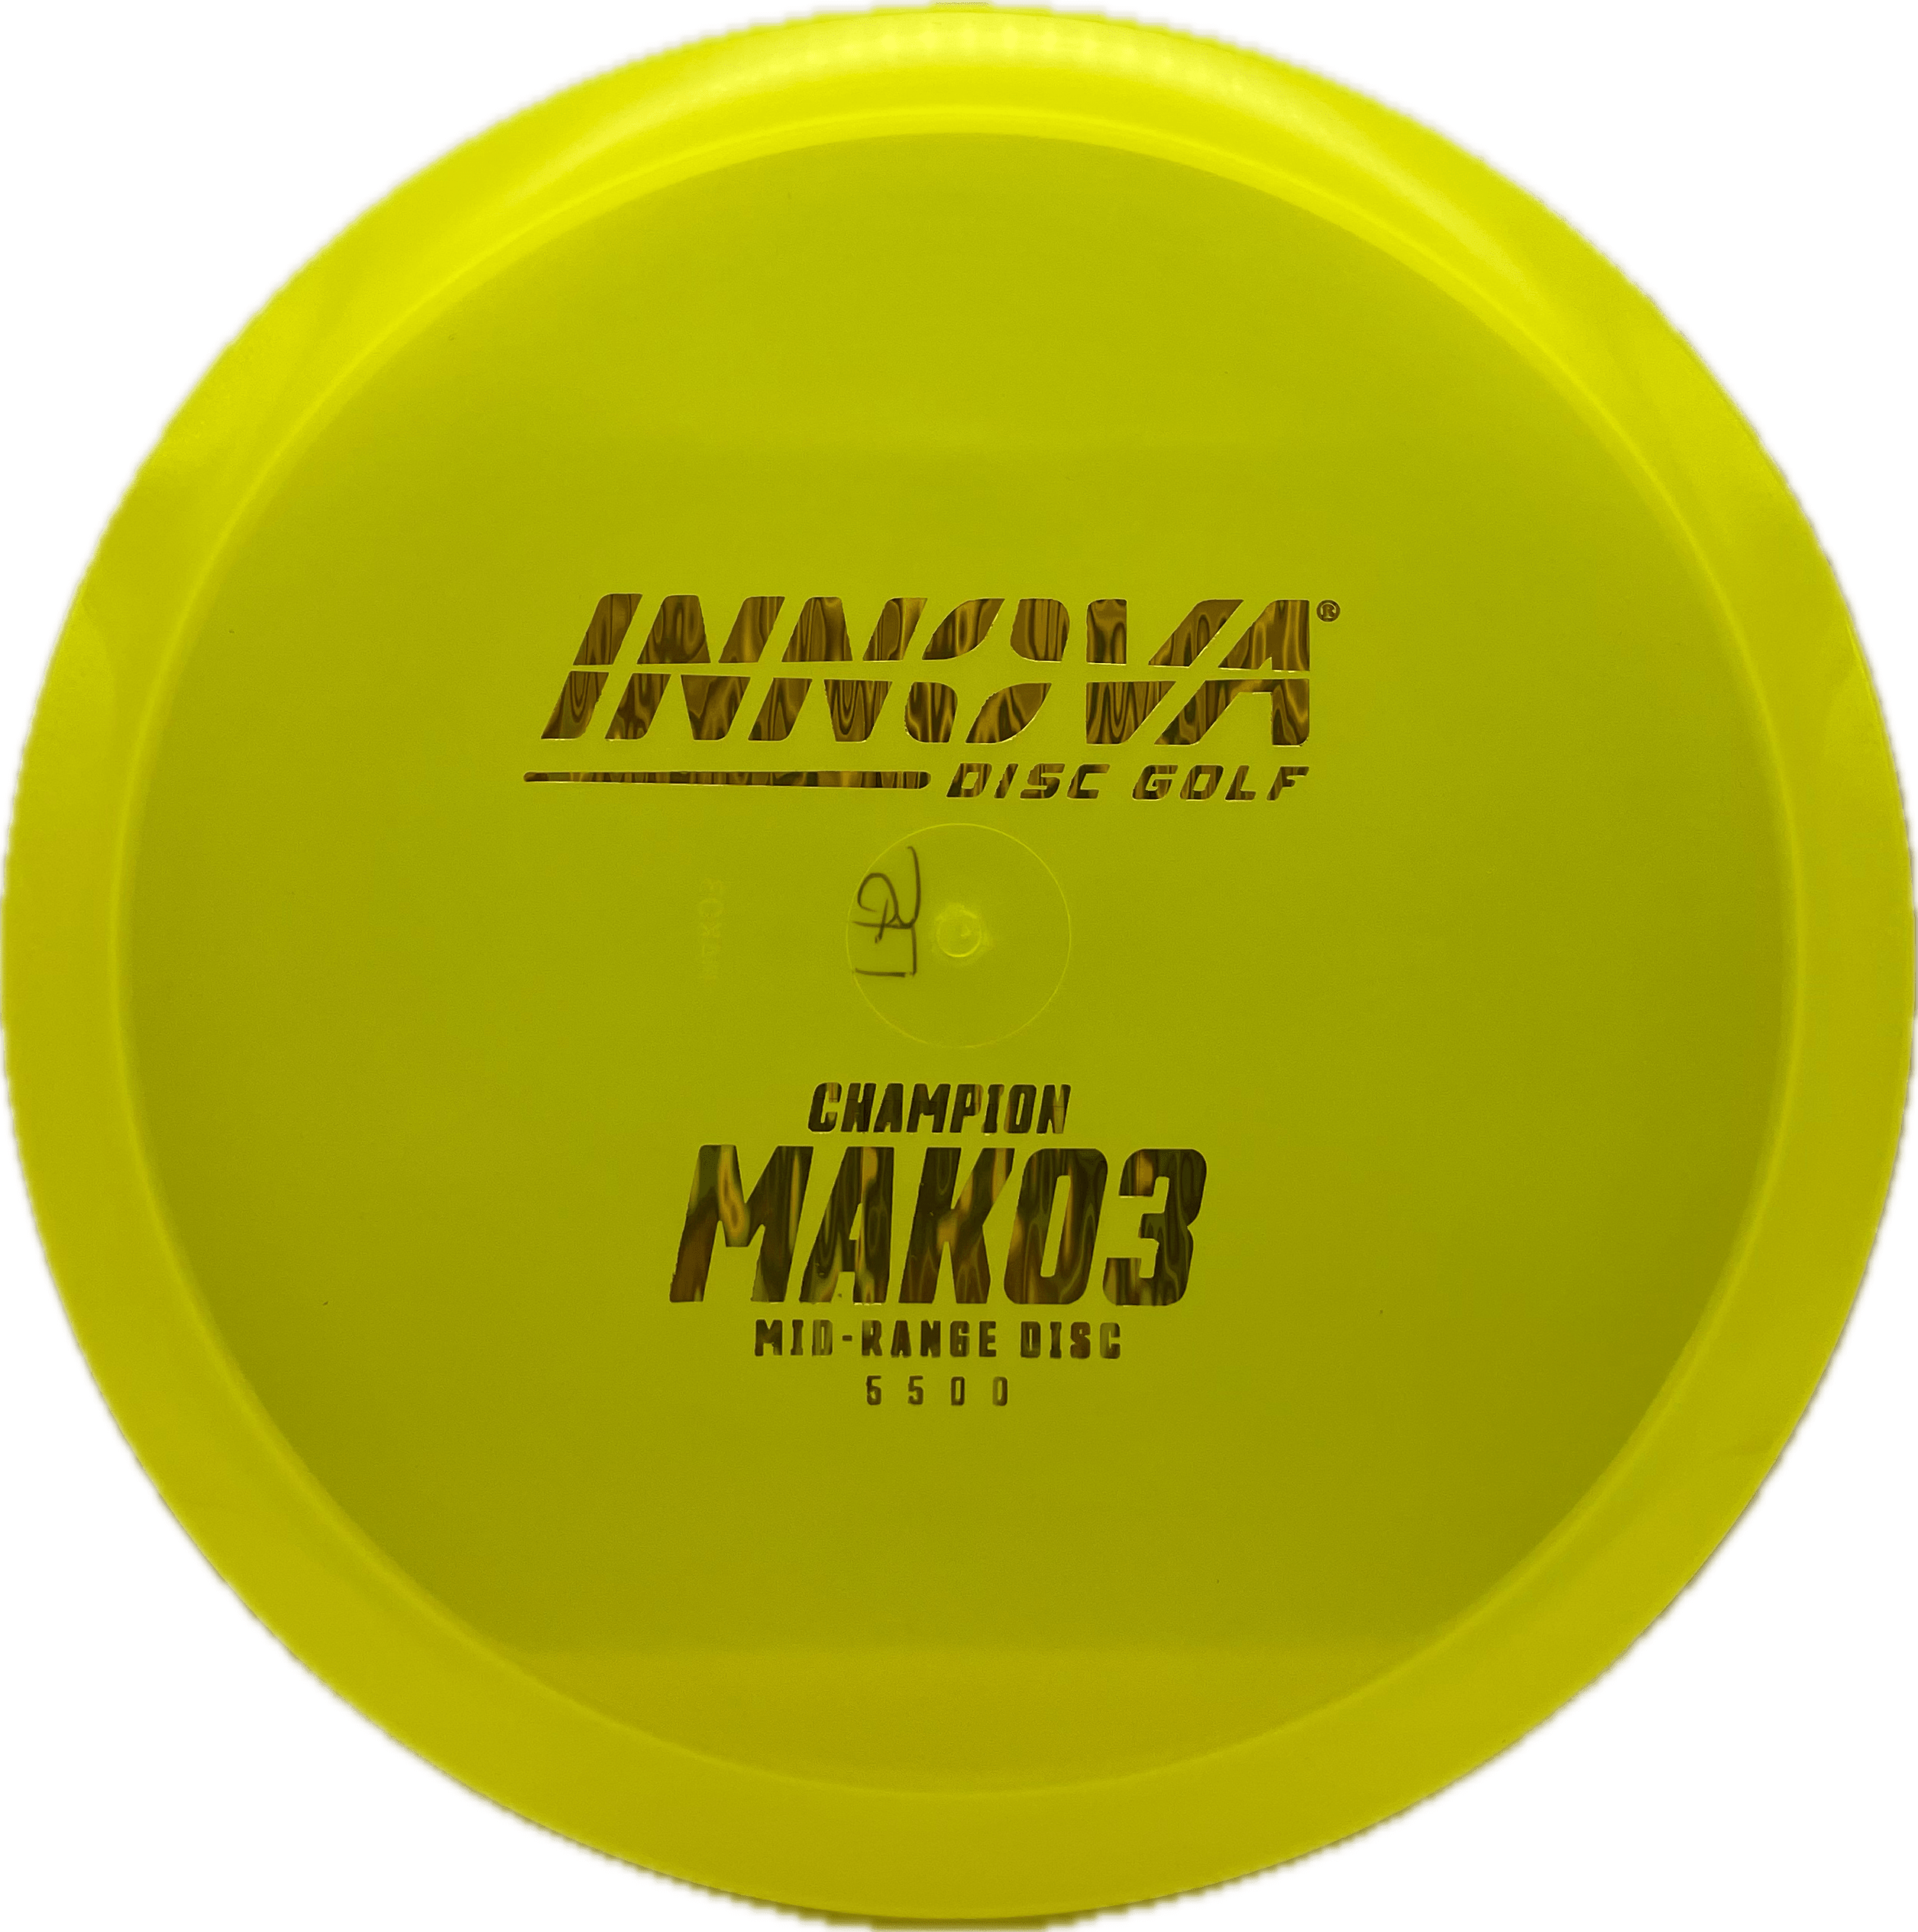 Innova Disc Innova Mako3, Champion, 175, Dayglow Yellow, Gold Waterfall